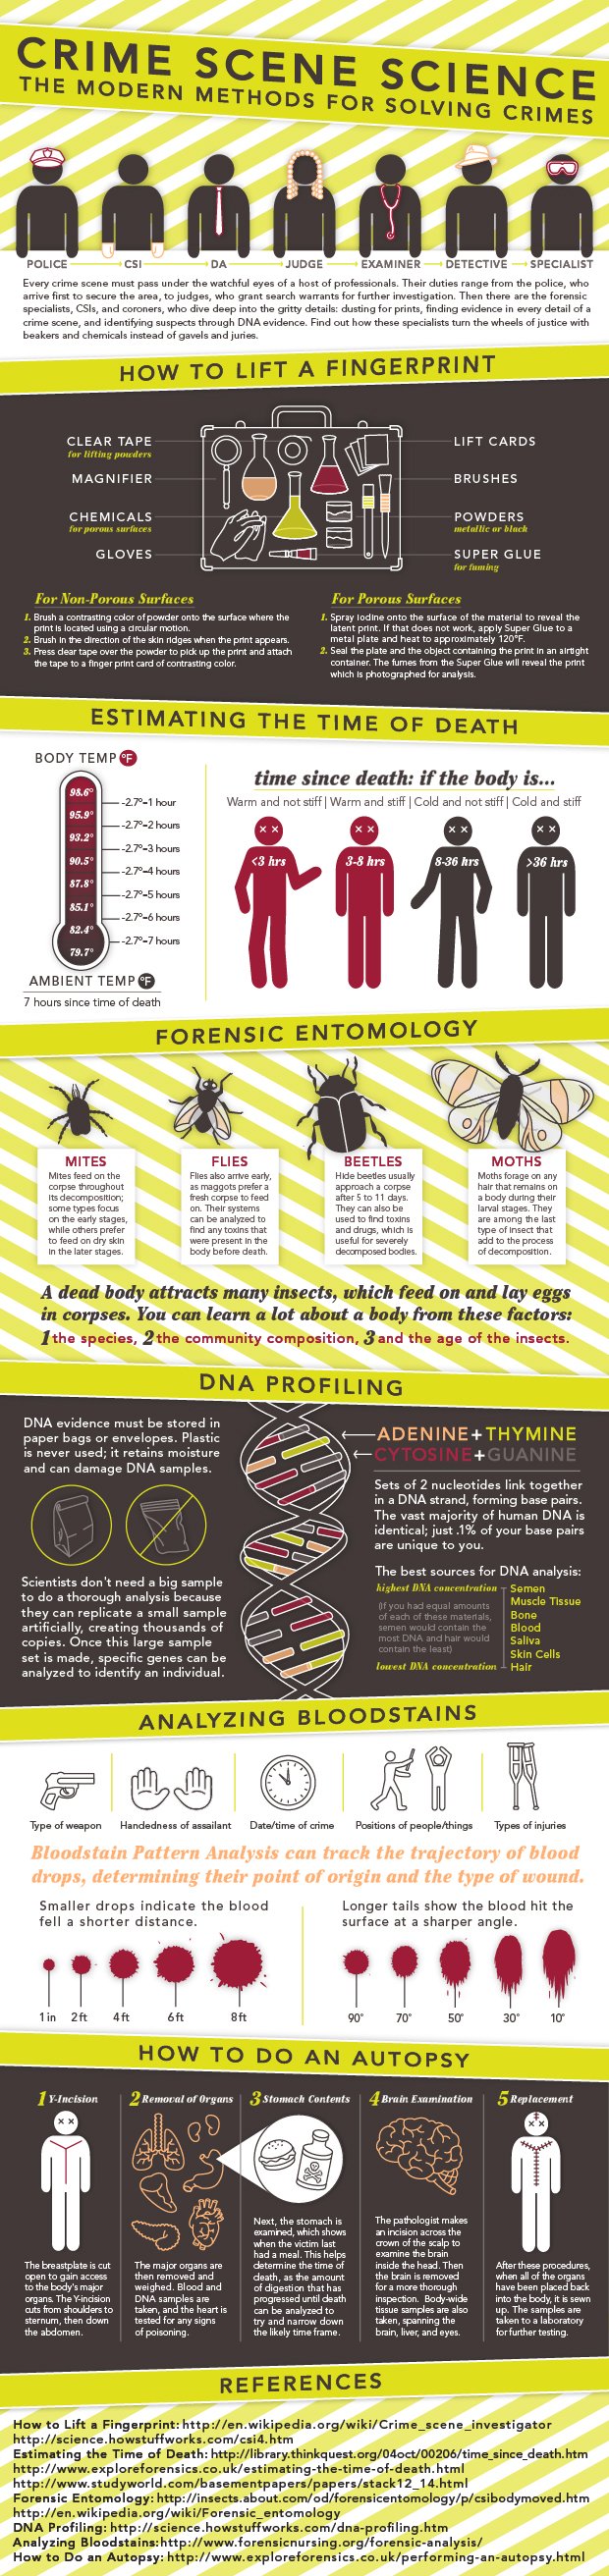 Forensic entomology infographic